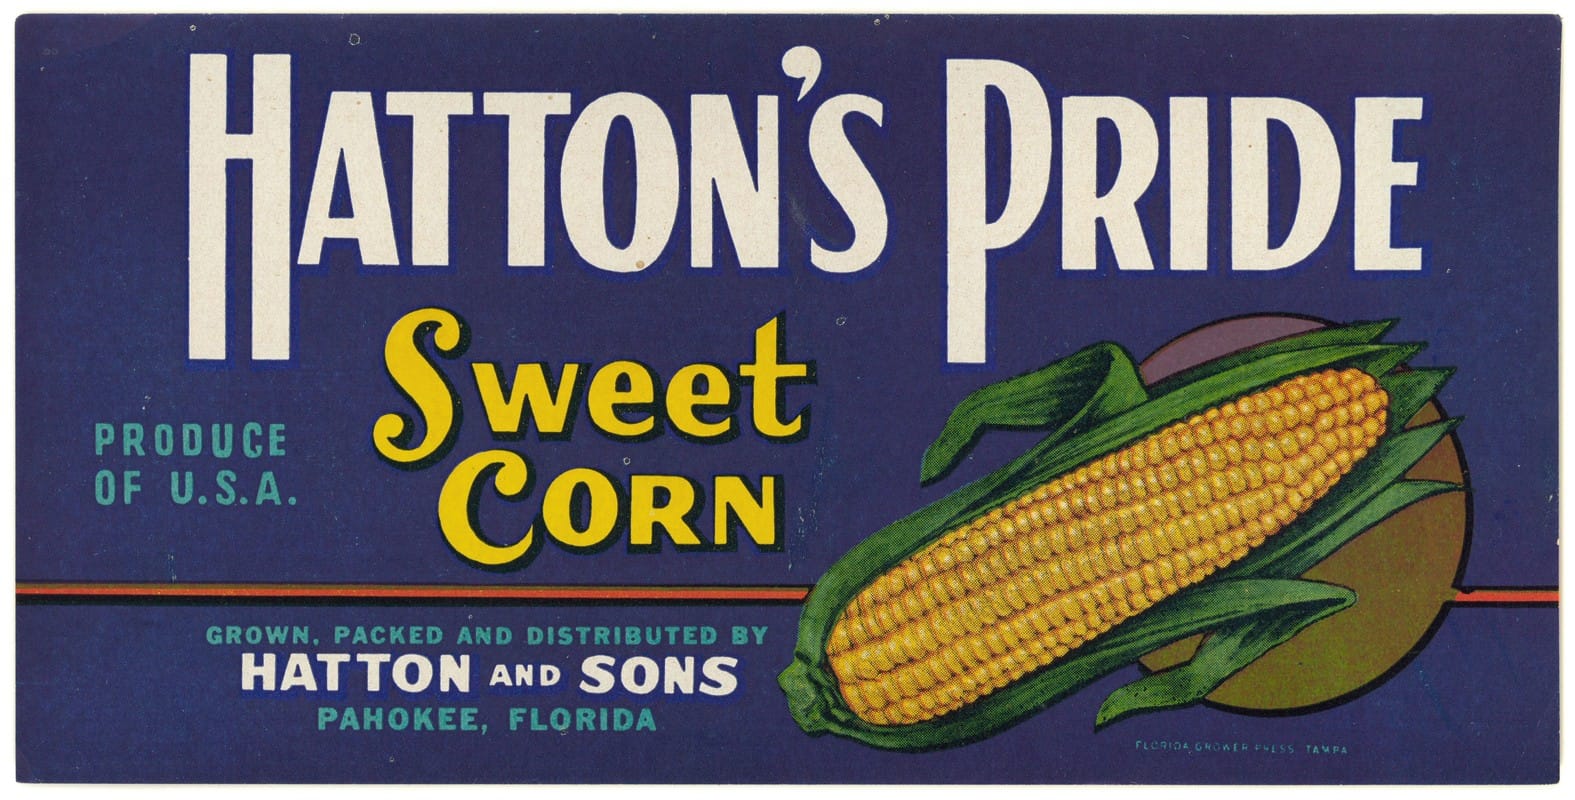 Anonymous - Hatton’s Pride Sweet Corn Label